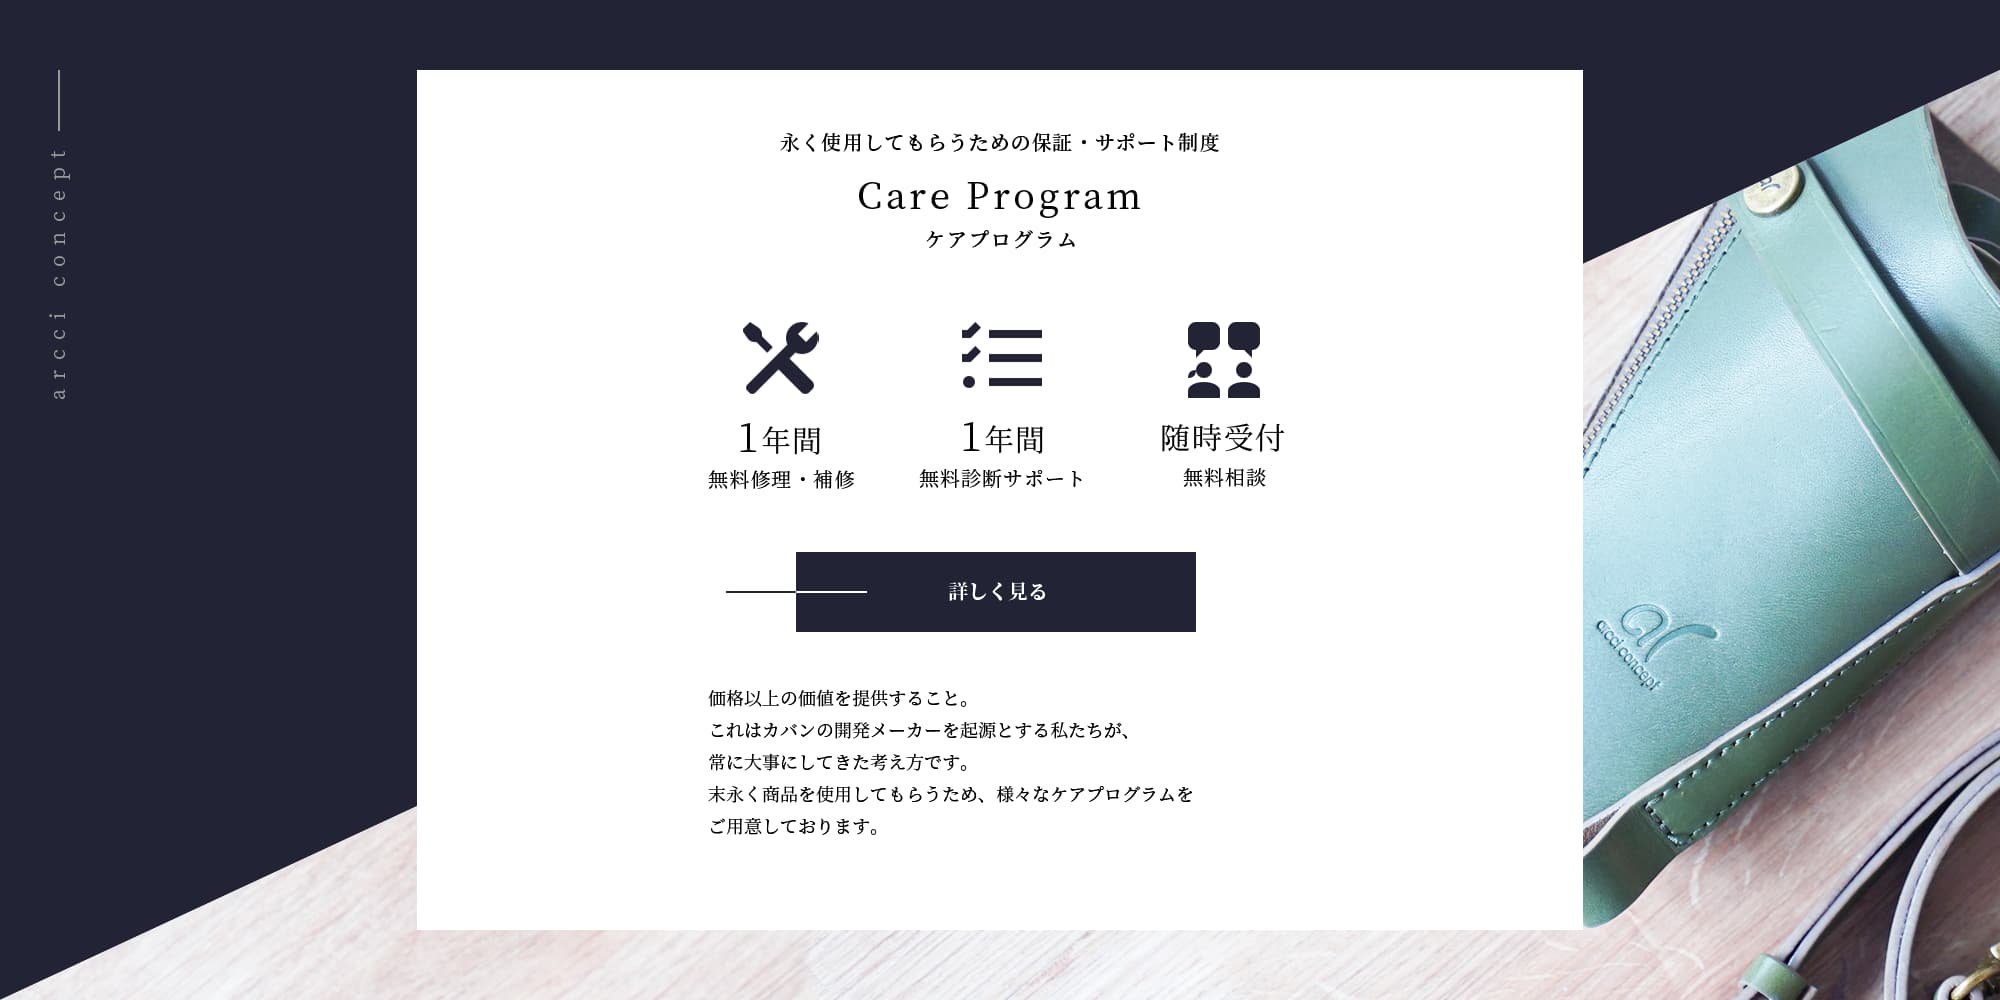 arcci concept Care program